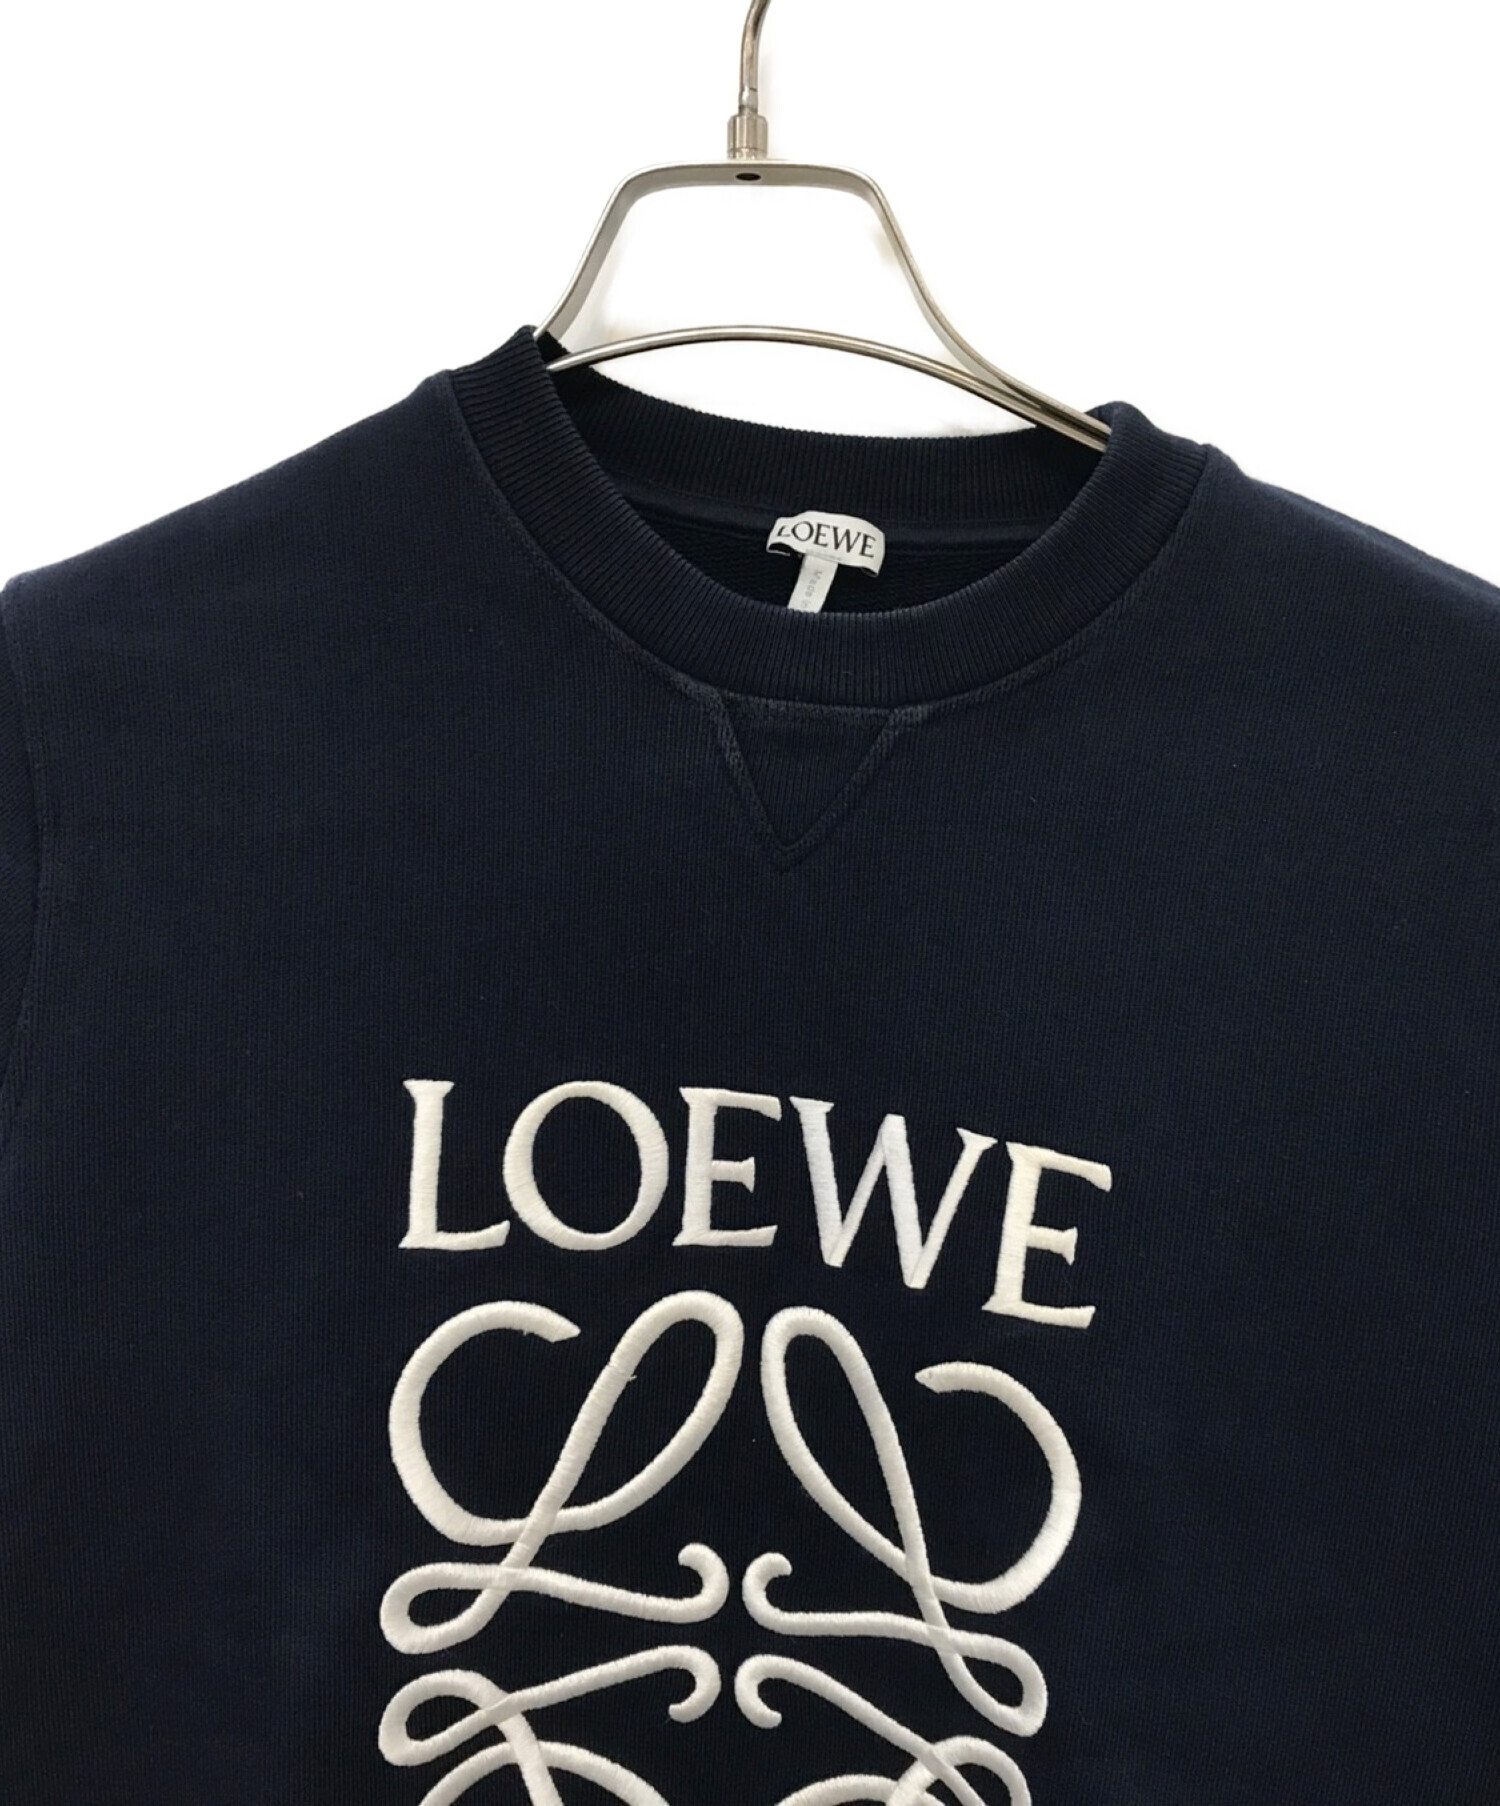 LOEWE ロエベ 刺繍ロゴ クルーネックトレーナー - トレーナー/スウェット